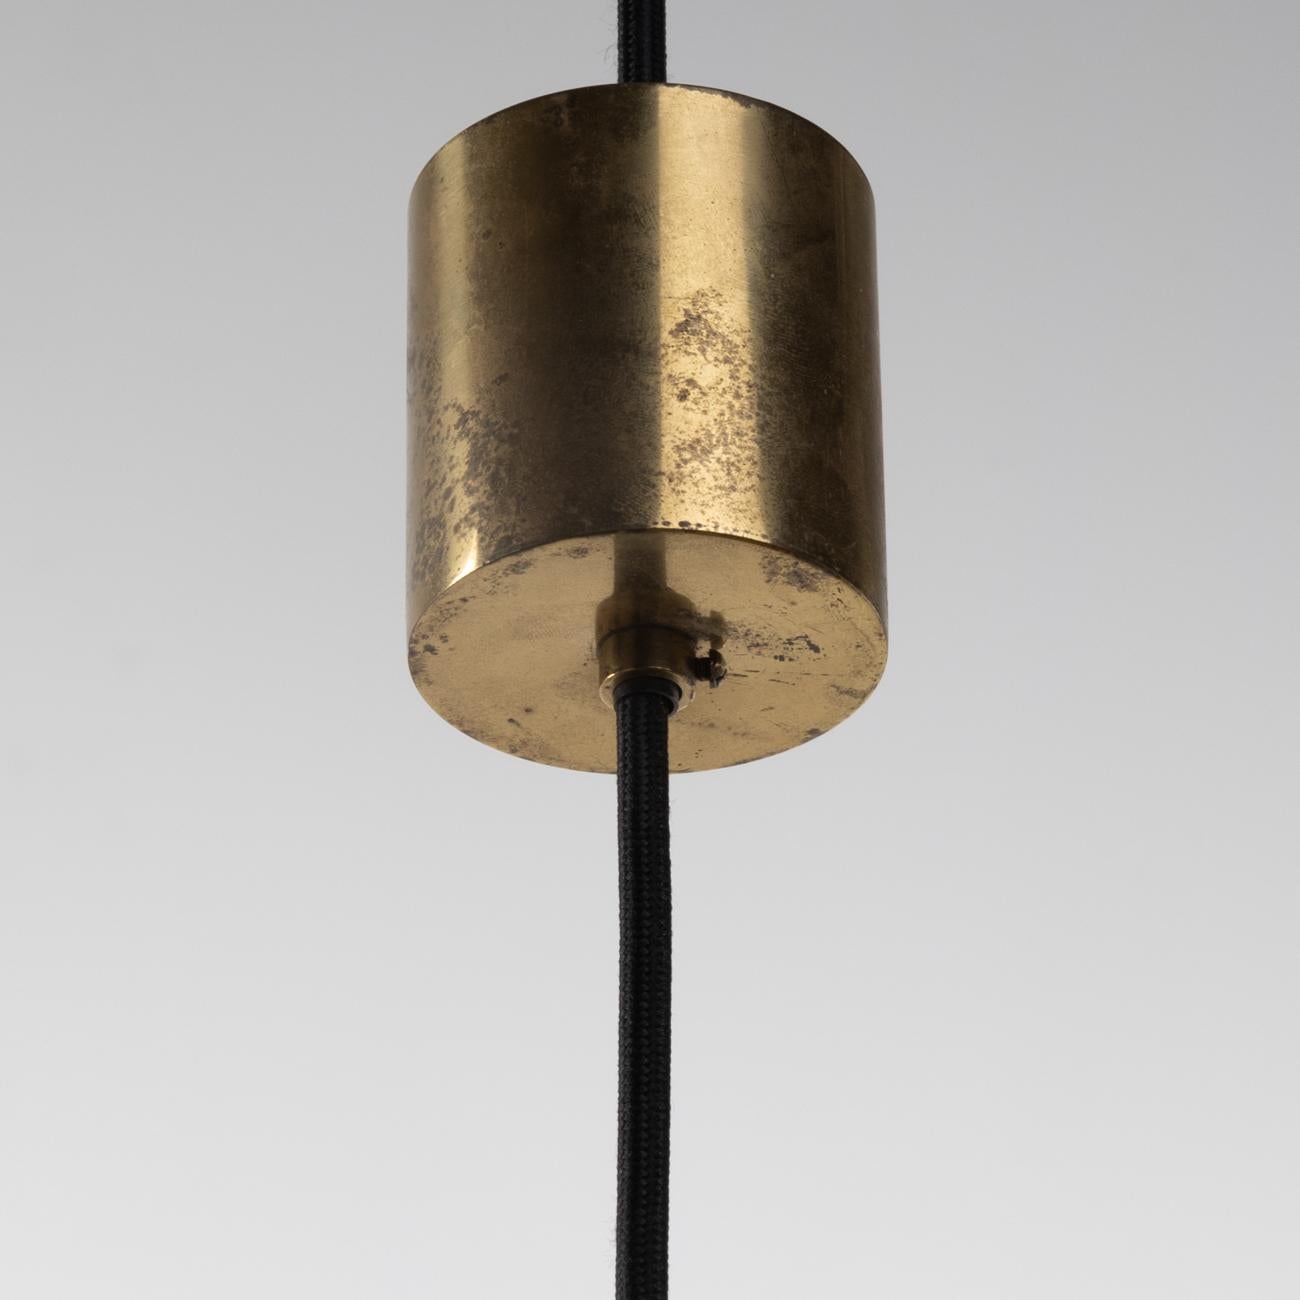 Italian Pendant Light, Model 2211, Max Ingrand, Fontana Arte 'Italy'